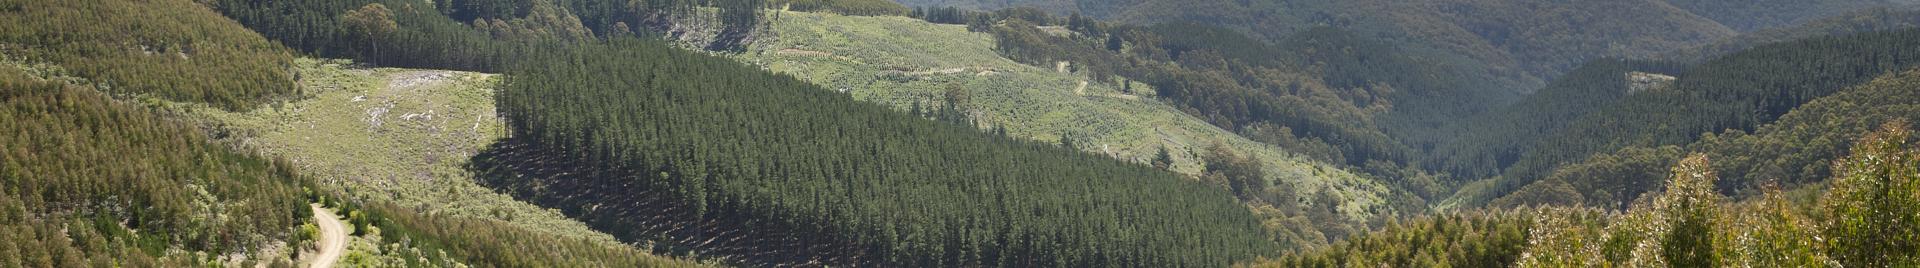 hvp plantations image1